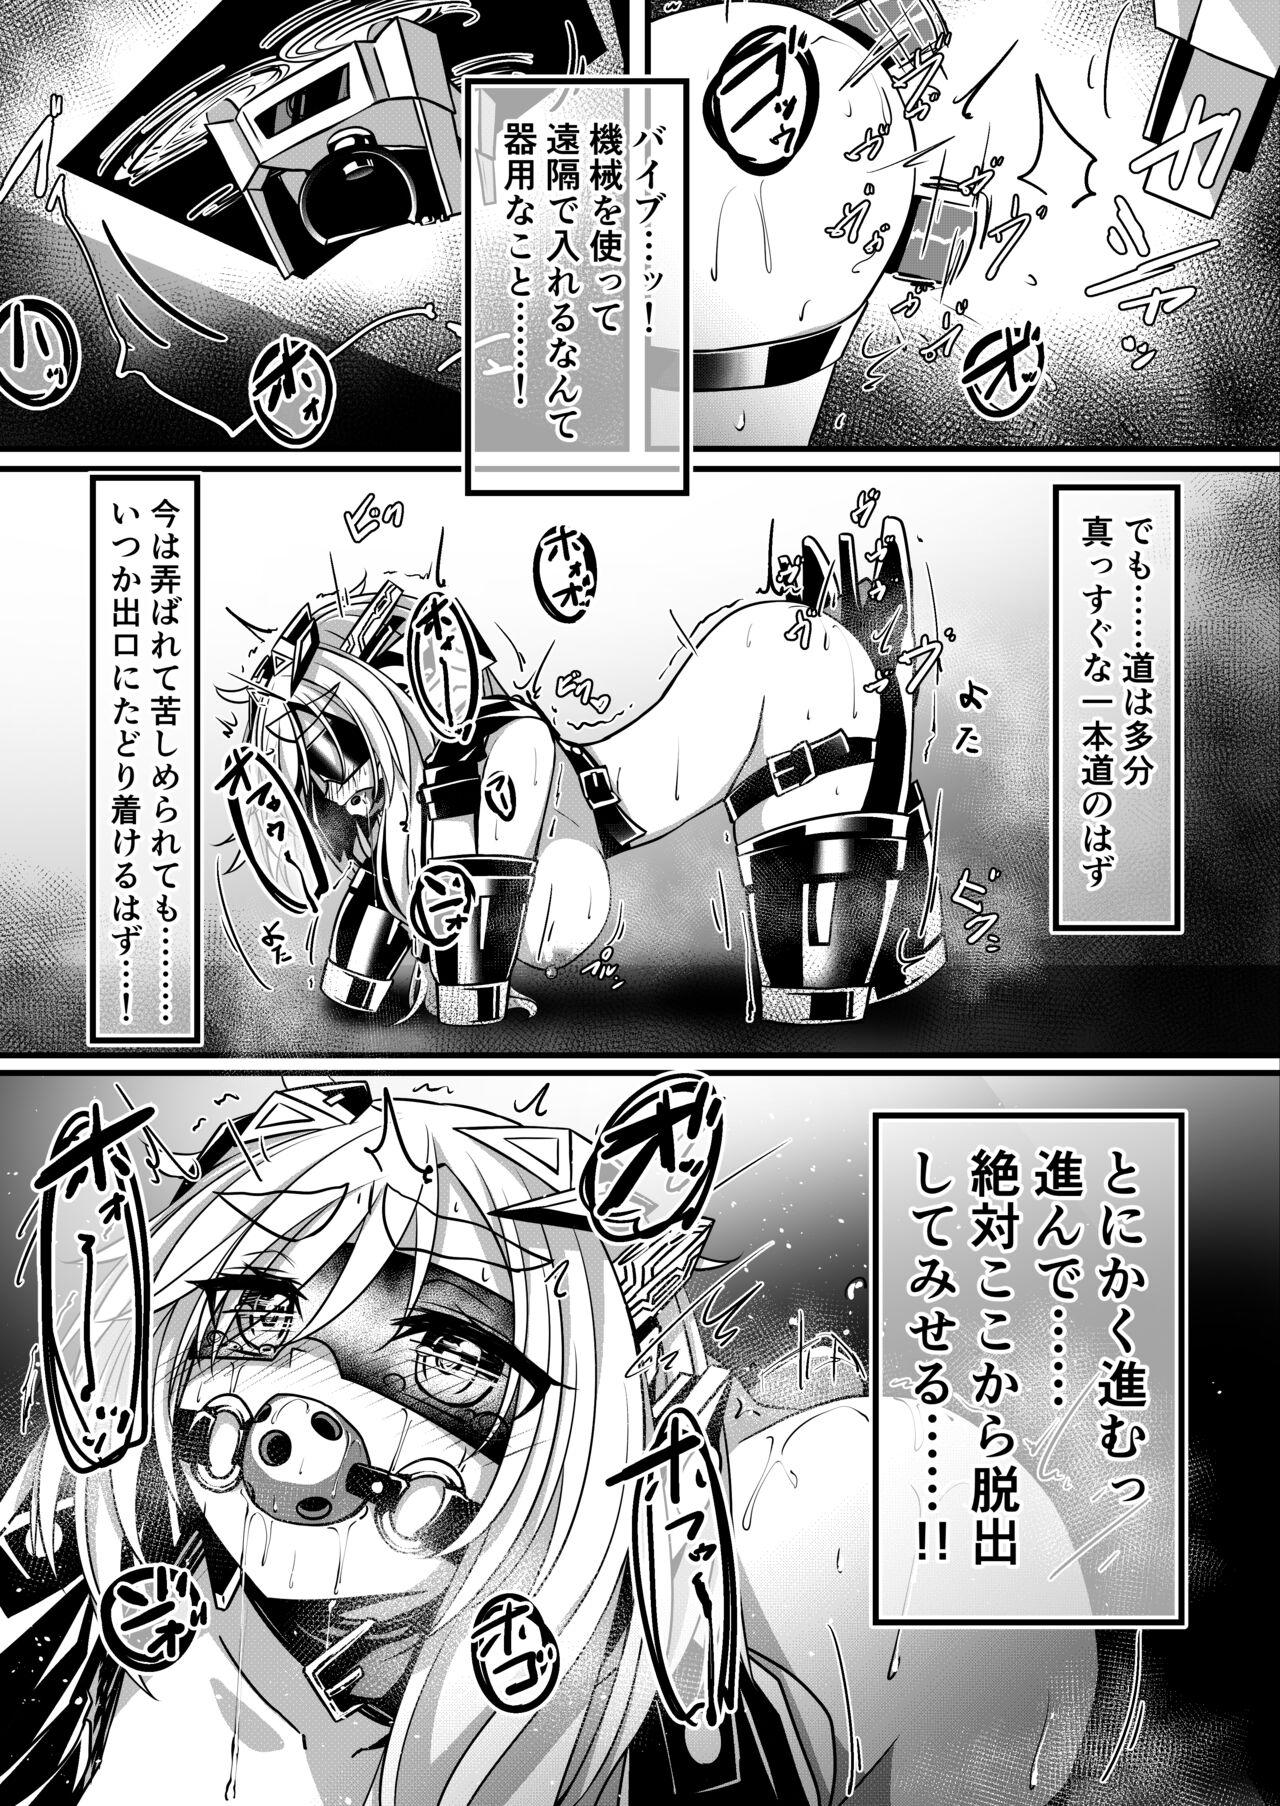 Pornstars ヒトイヌ馬之助ちゃん脱出漫画 - Original Web - Page 4